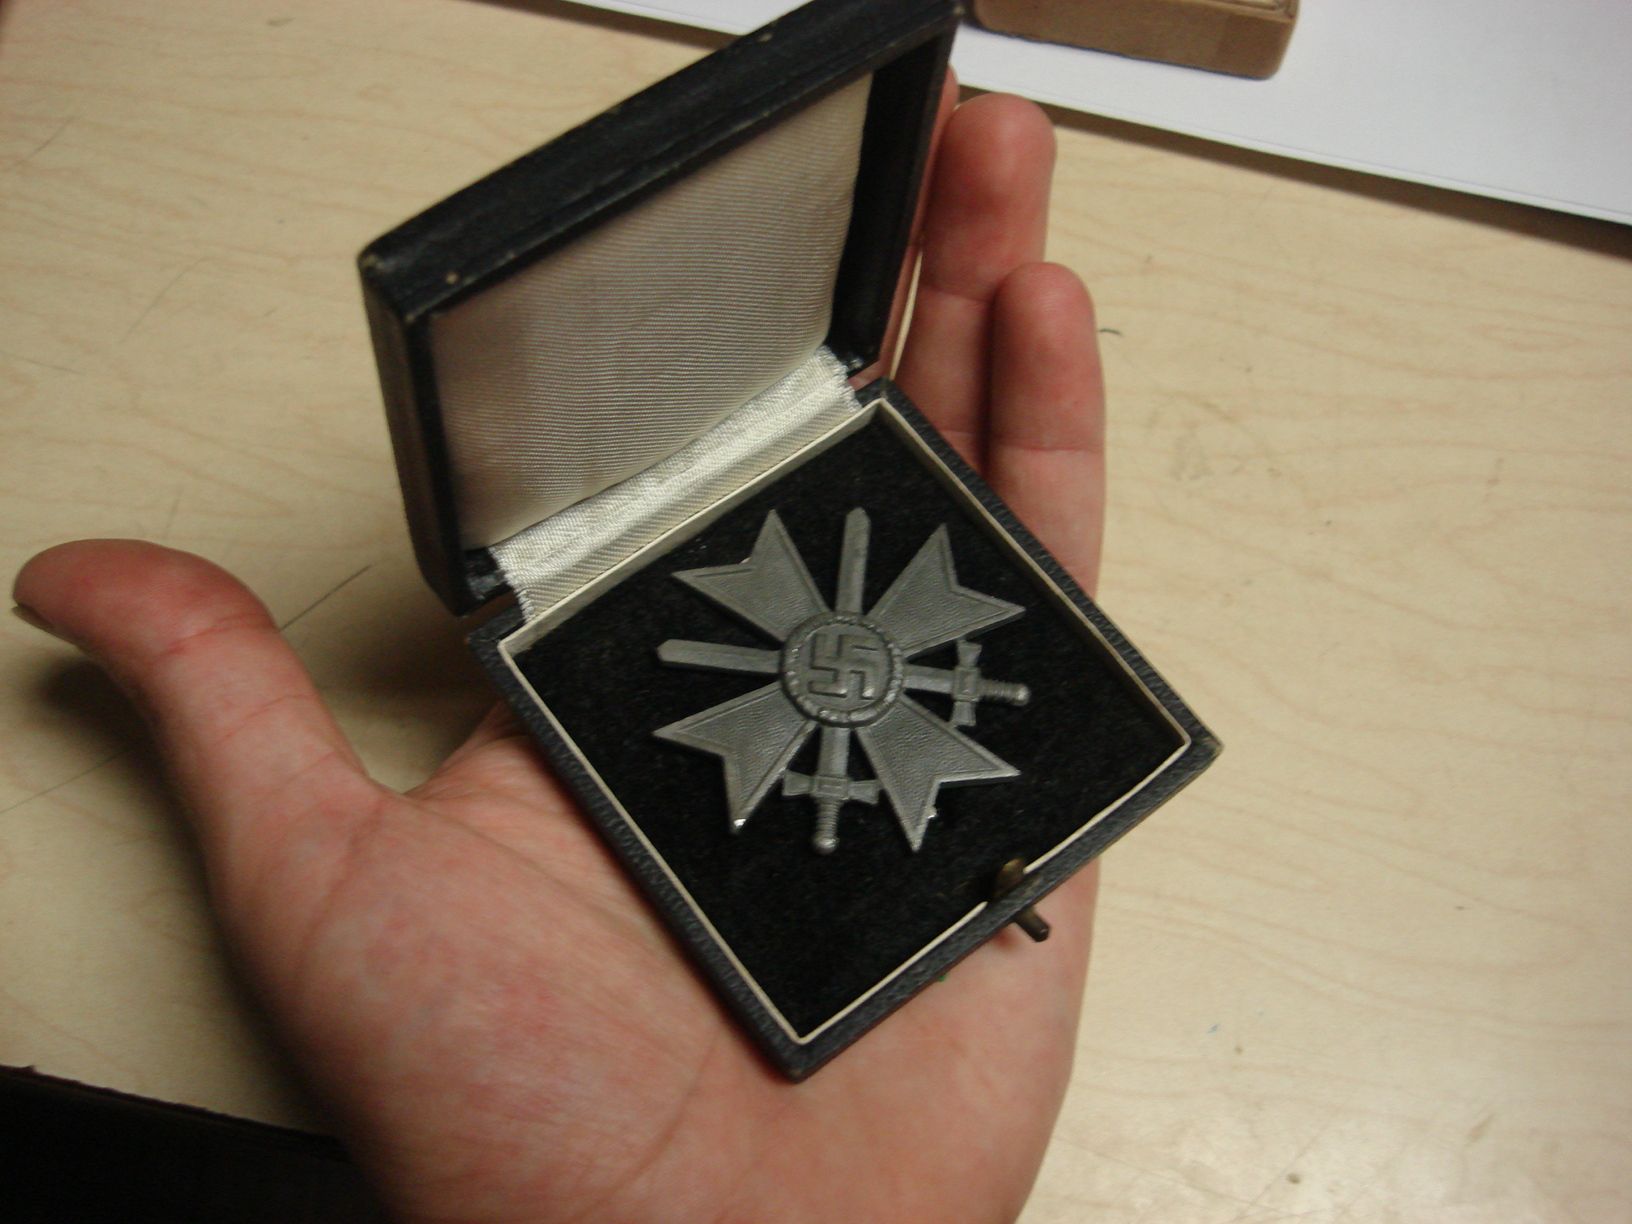 WWII German First Class Merit Cross in original box.
Found Oct. 8 2014